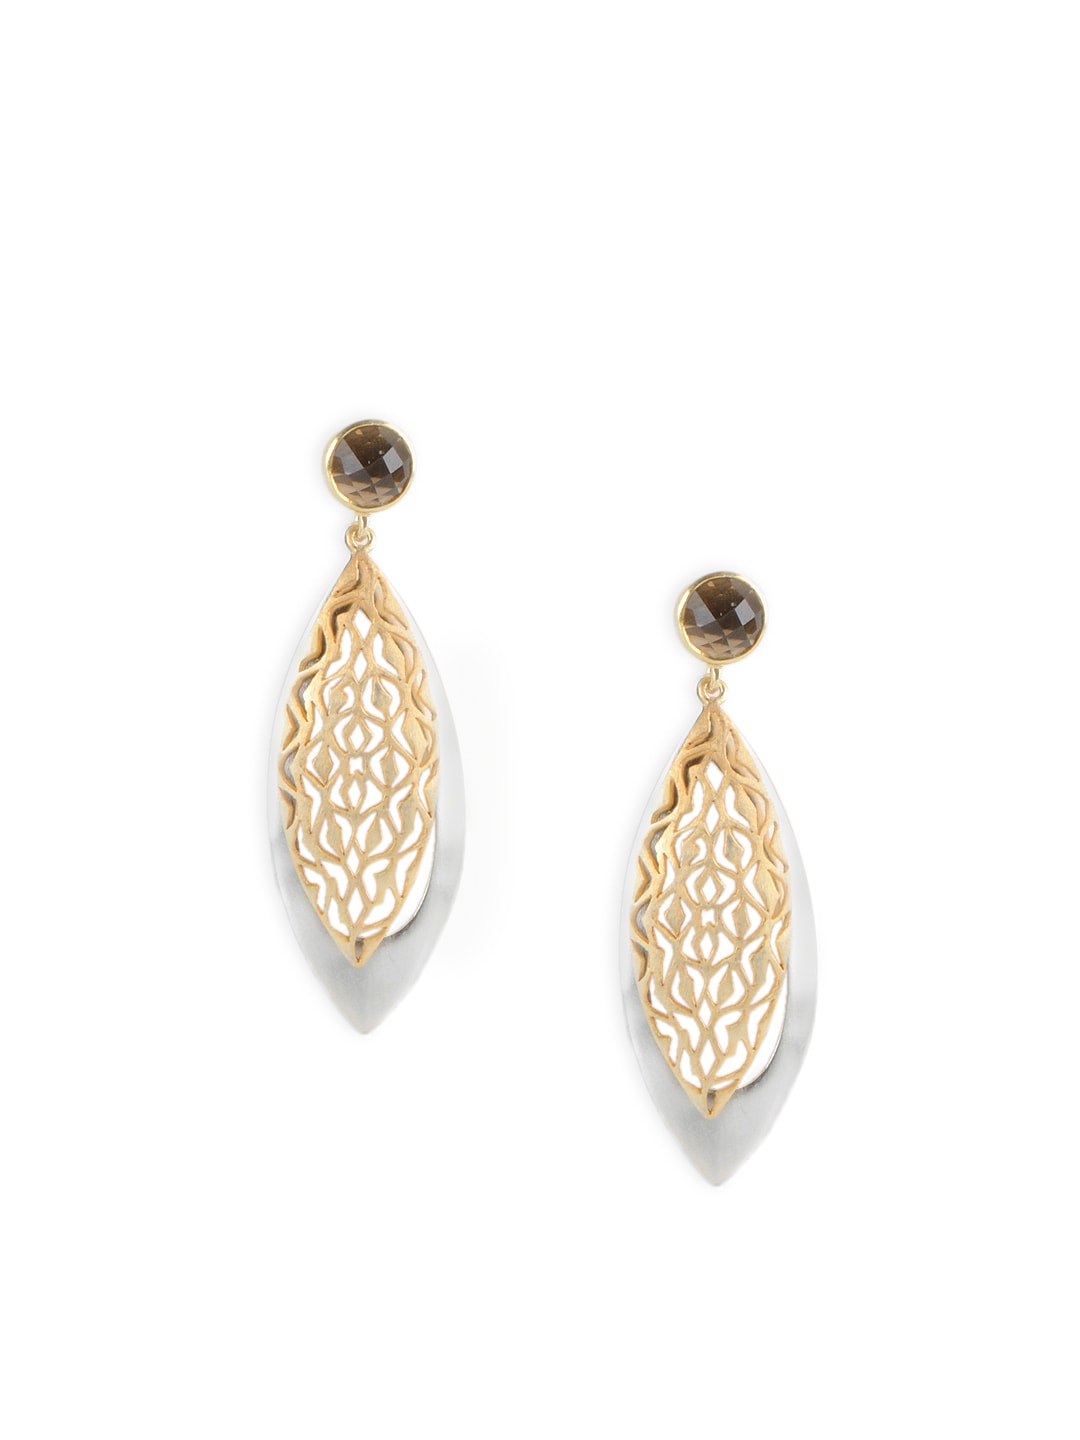 Fabindia Silver & Gold Earrings